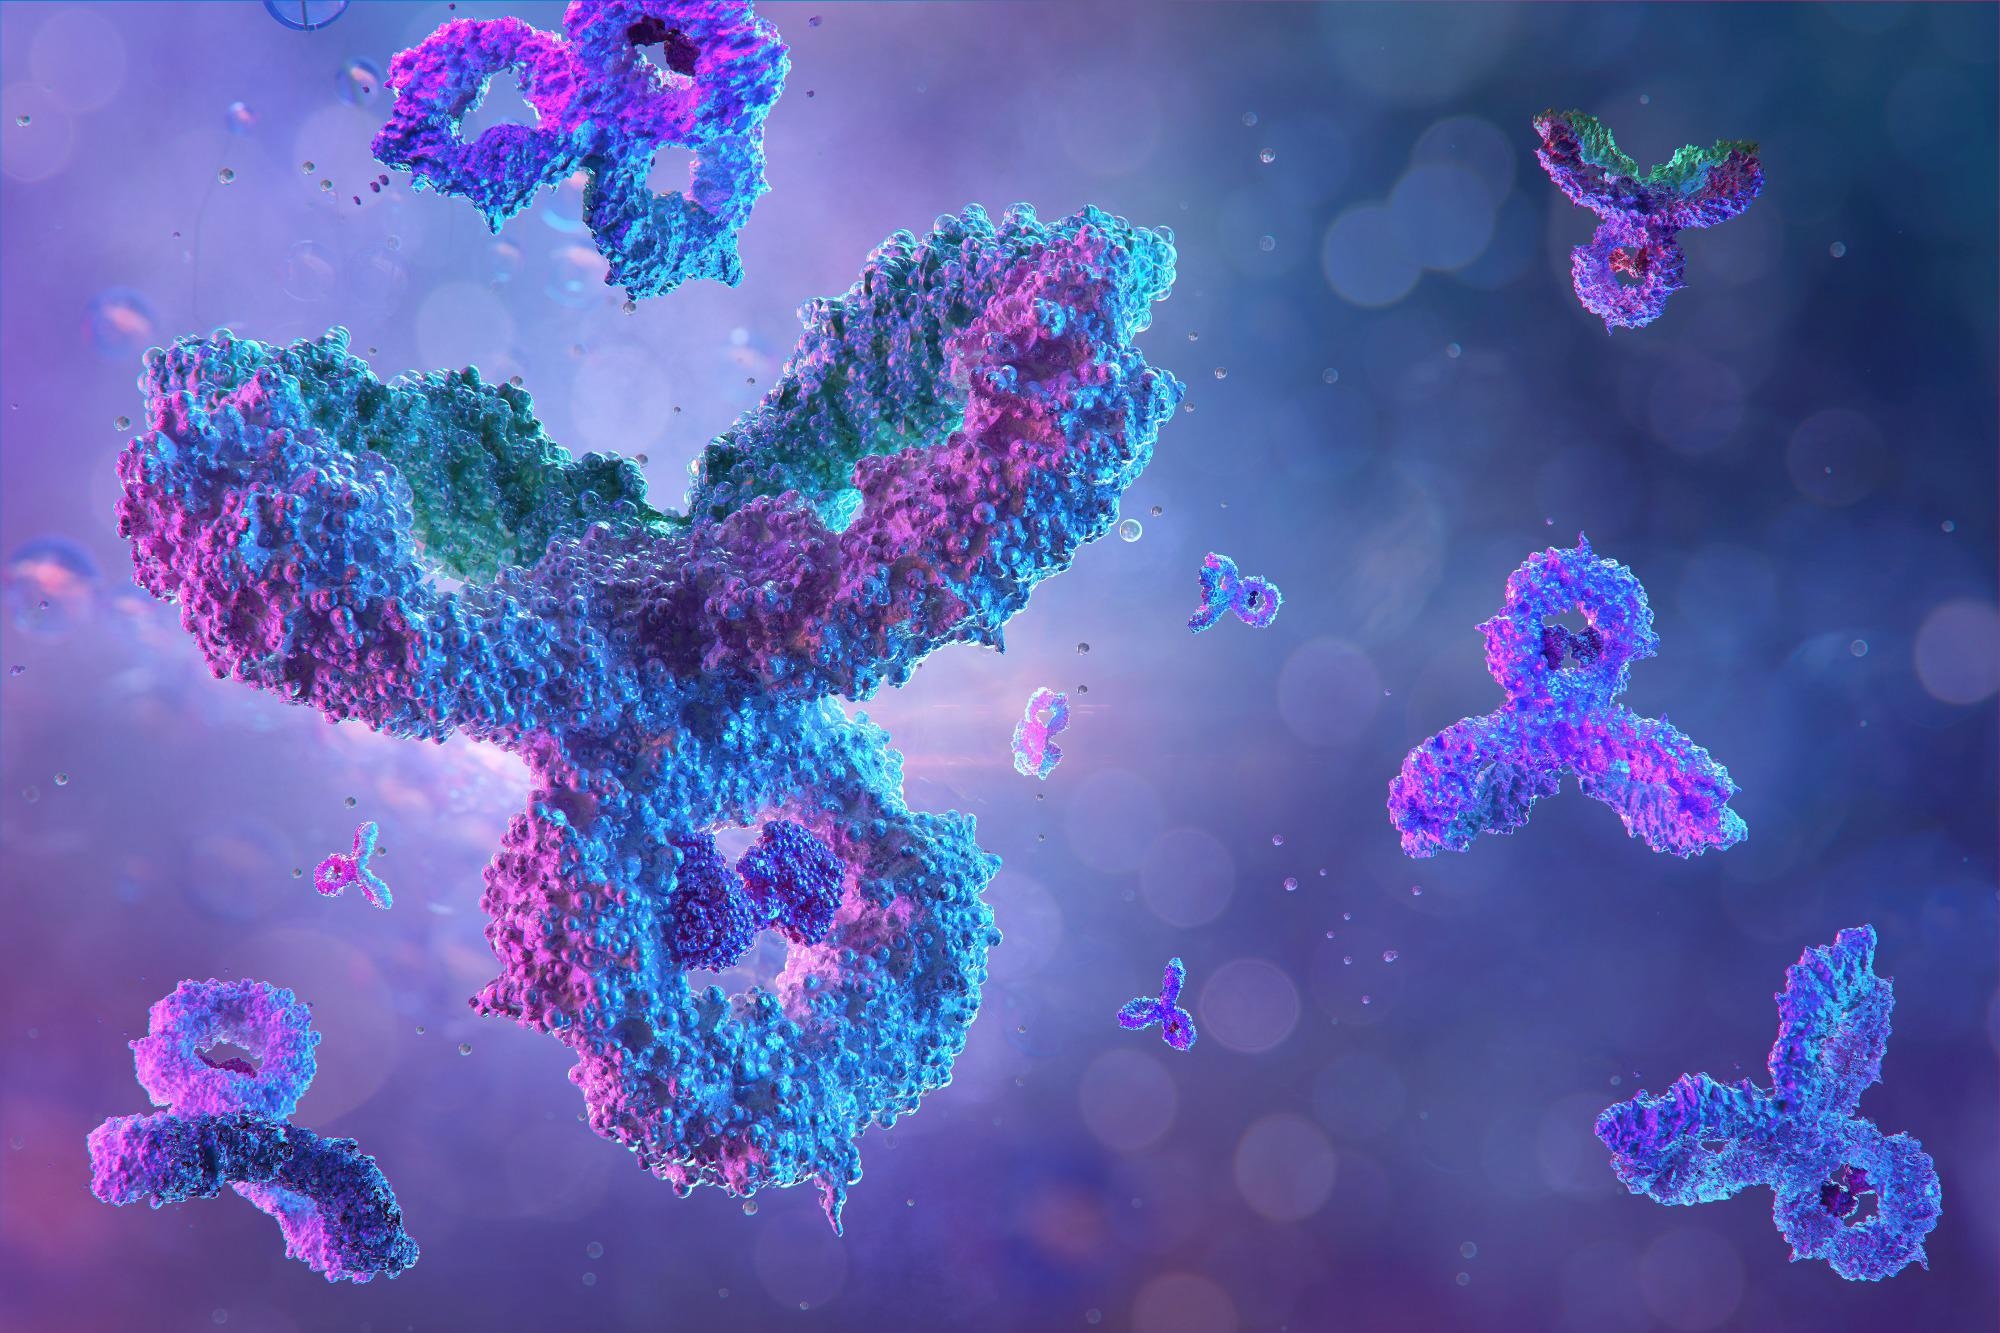 Study: BNT162b2 induces robust cross-variant SARS-CoV-2 immunity in children. Image Credit: Corona Borealis Studio / Shutterstock